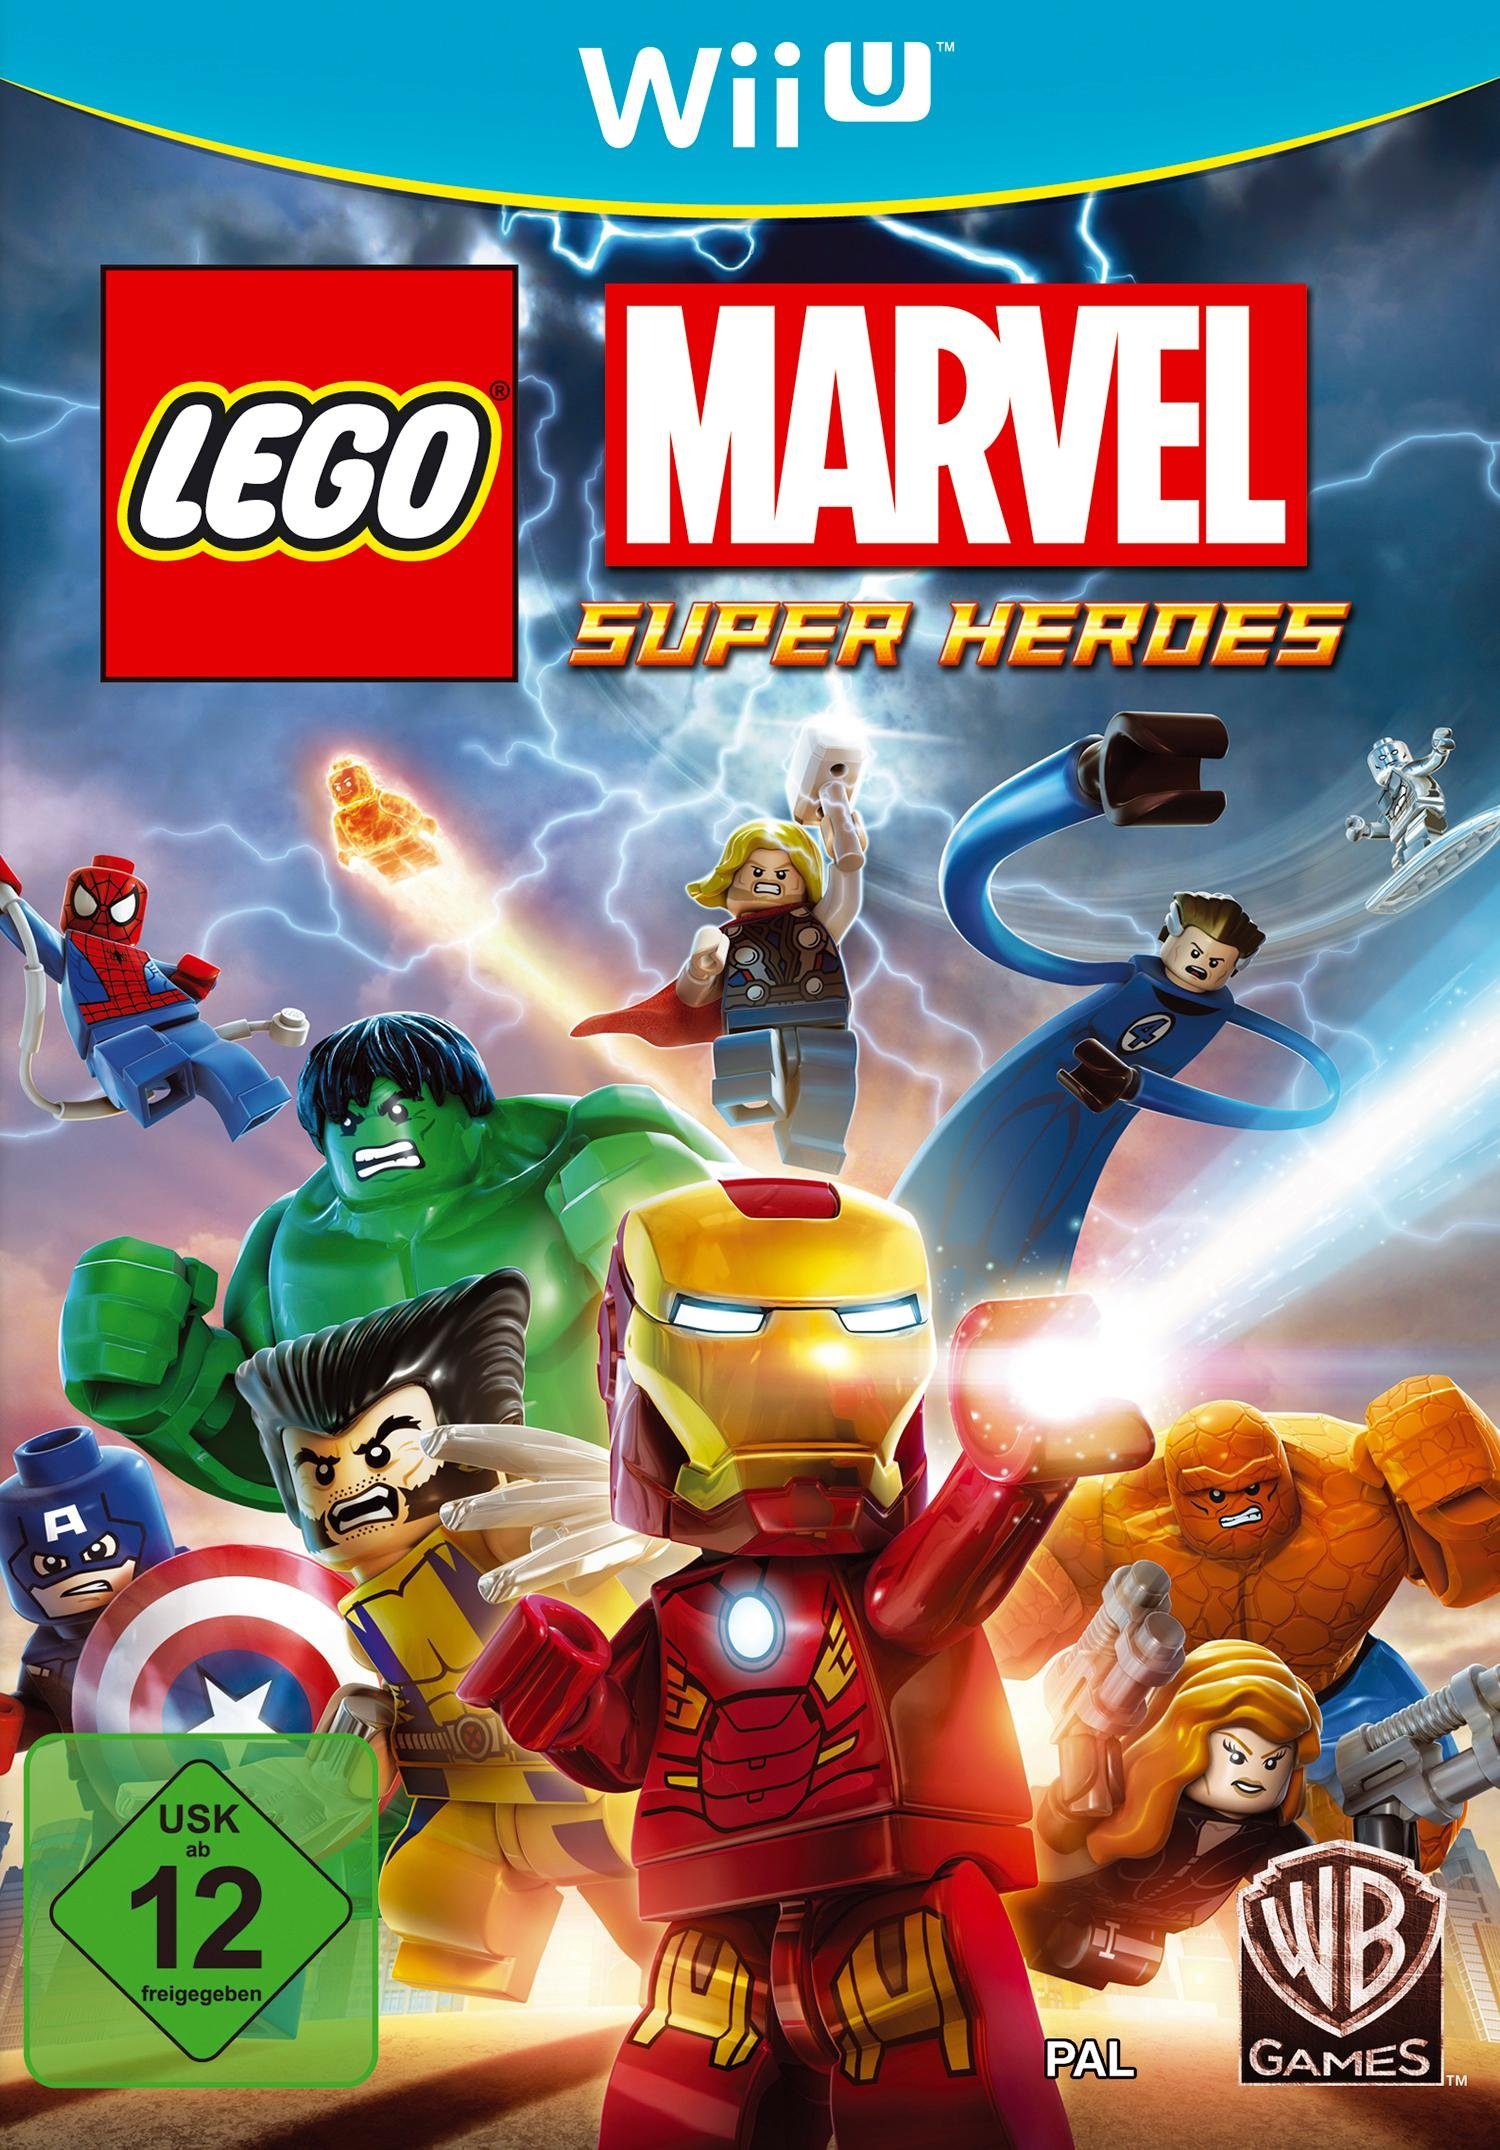 Heroes Wii U, Super Pyramide Marvel LEGO Nintendo Software